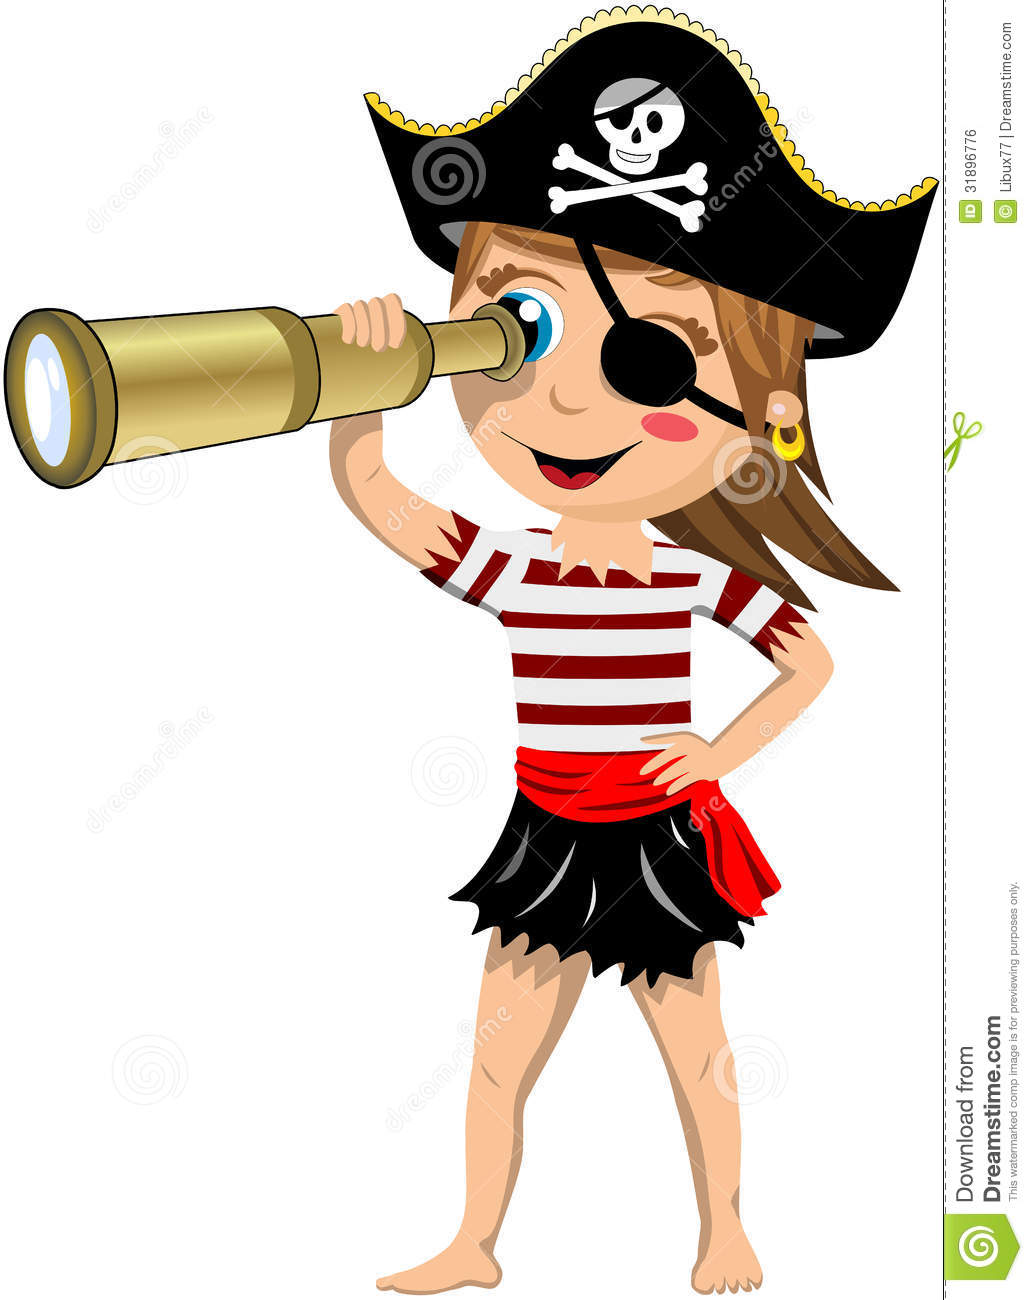 Pirate Girl Looking Through Telescope Royalty Free Stock Image   Image